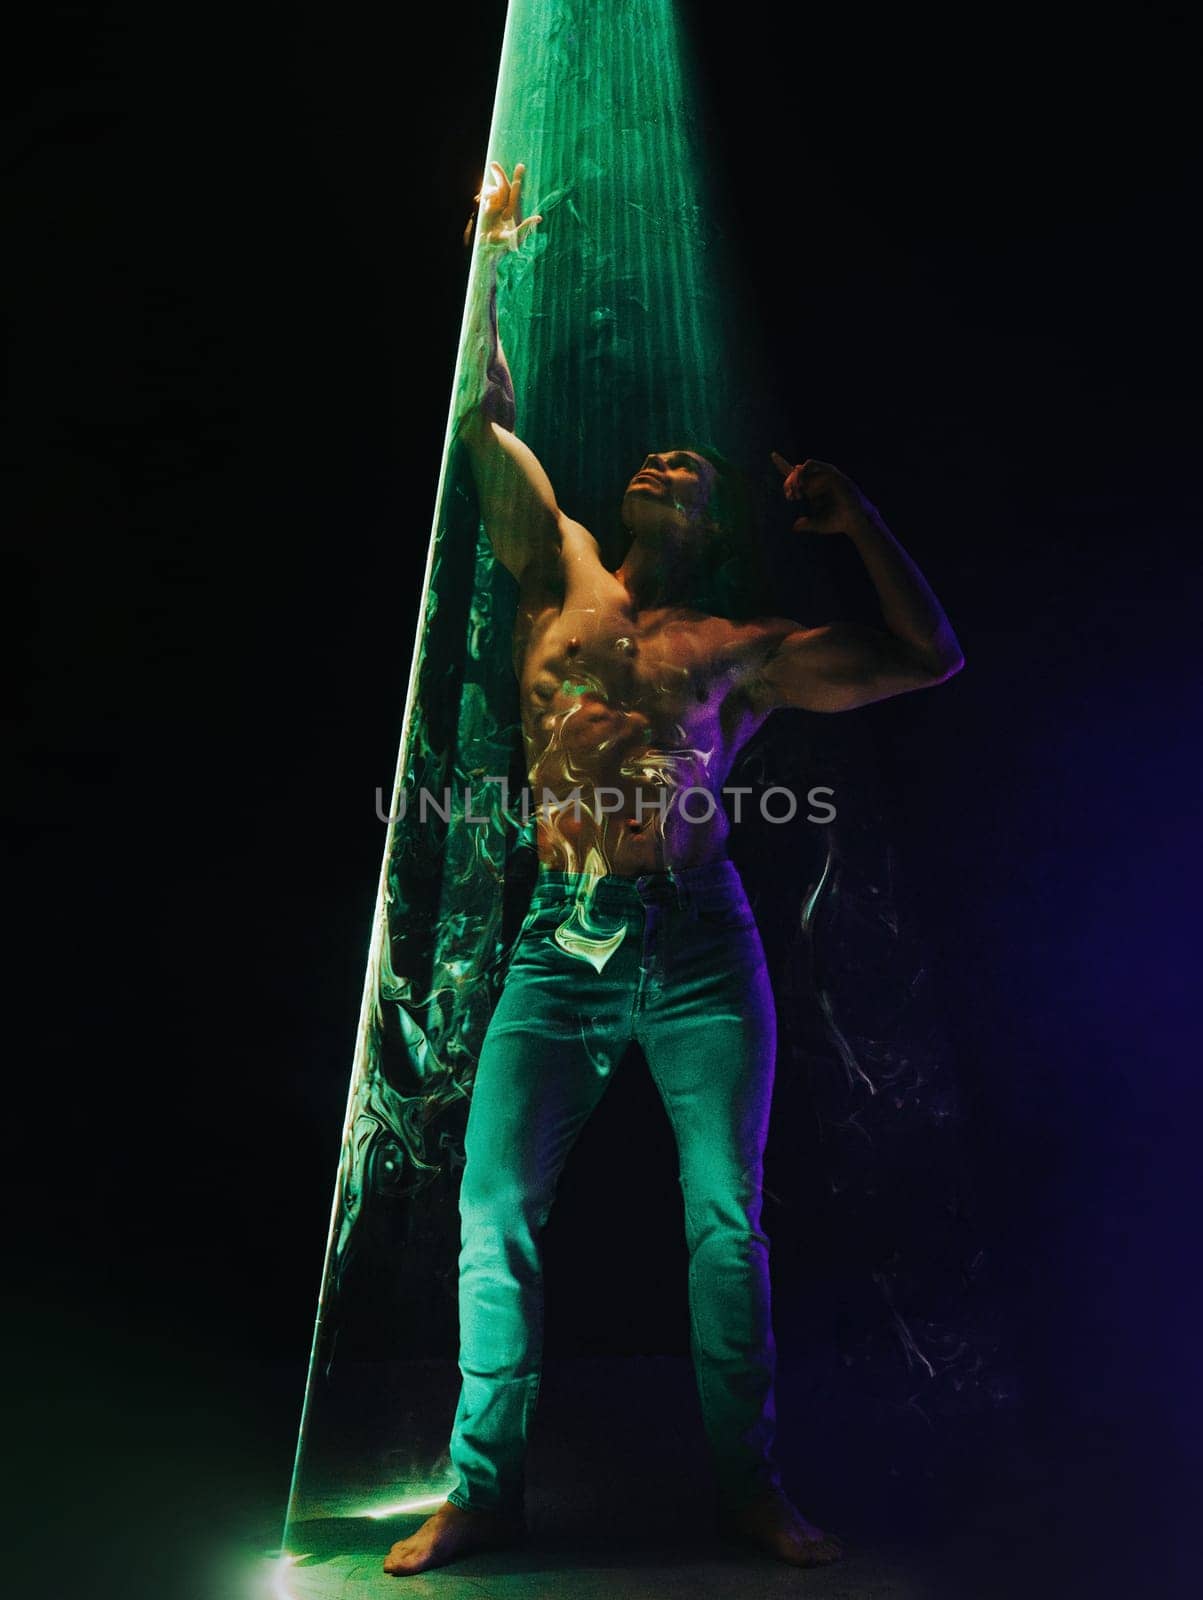 Sporty handsome muscular man portrait under colorful illumination, laser light by kristina_kokhanova